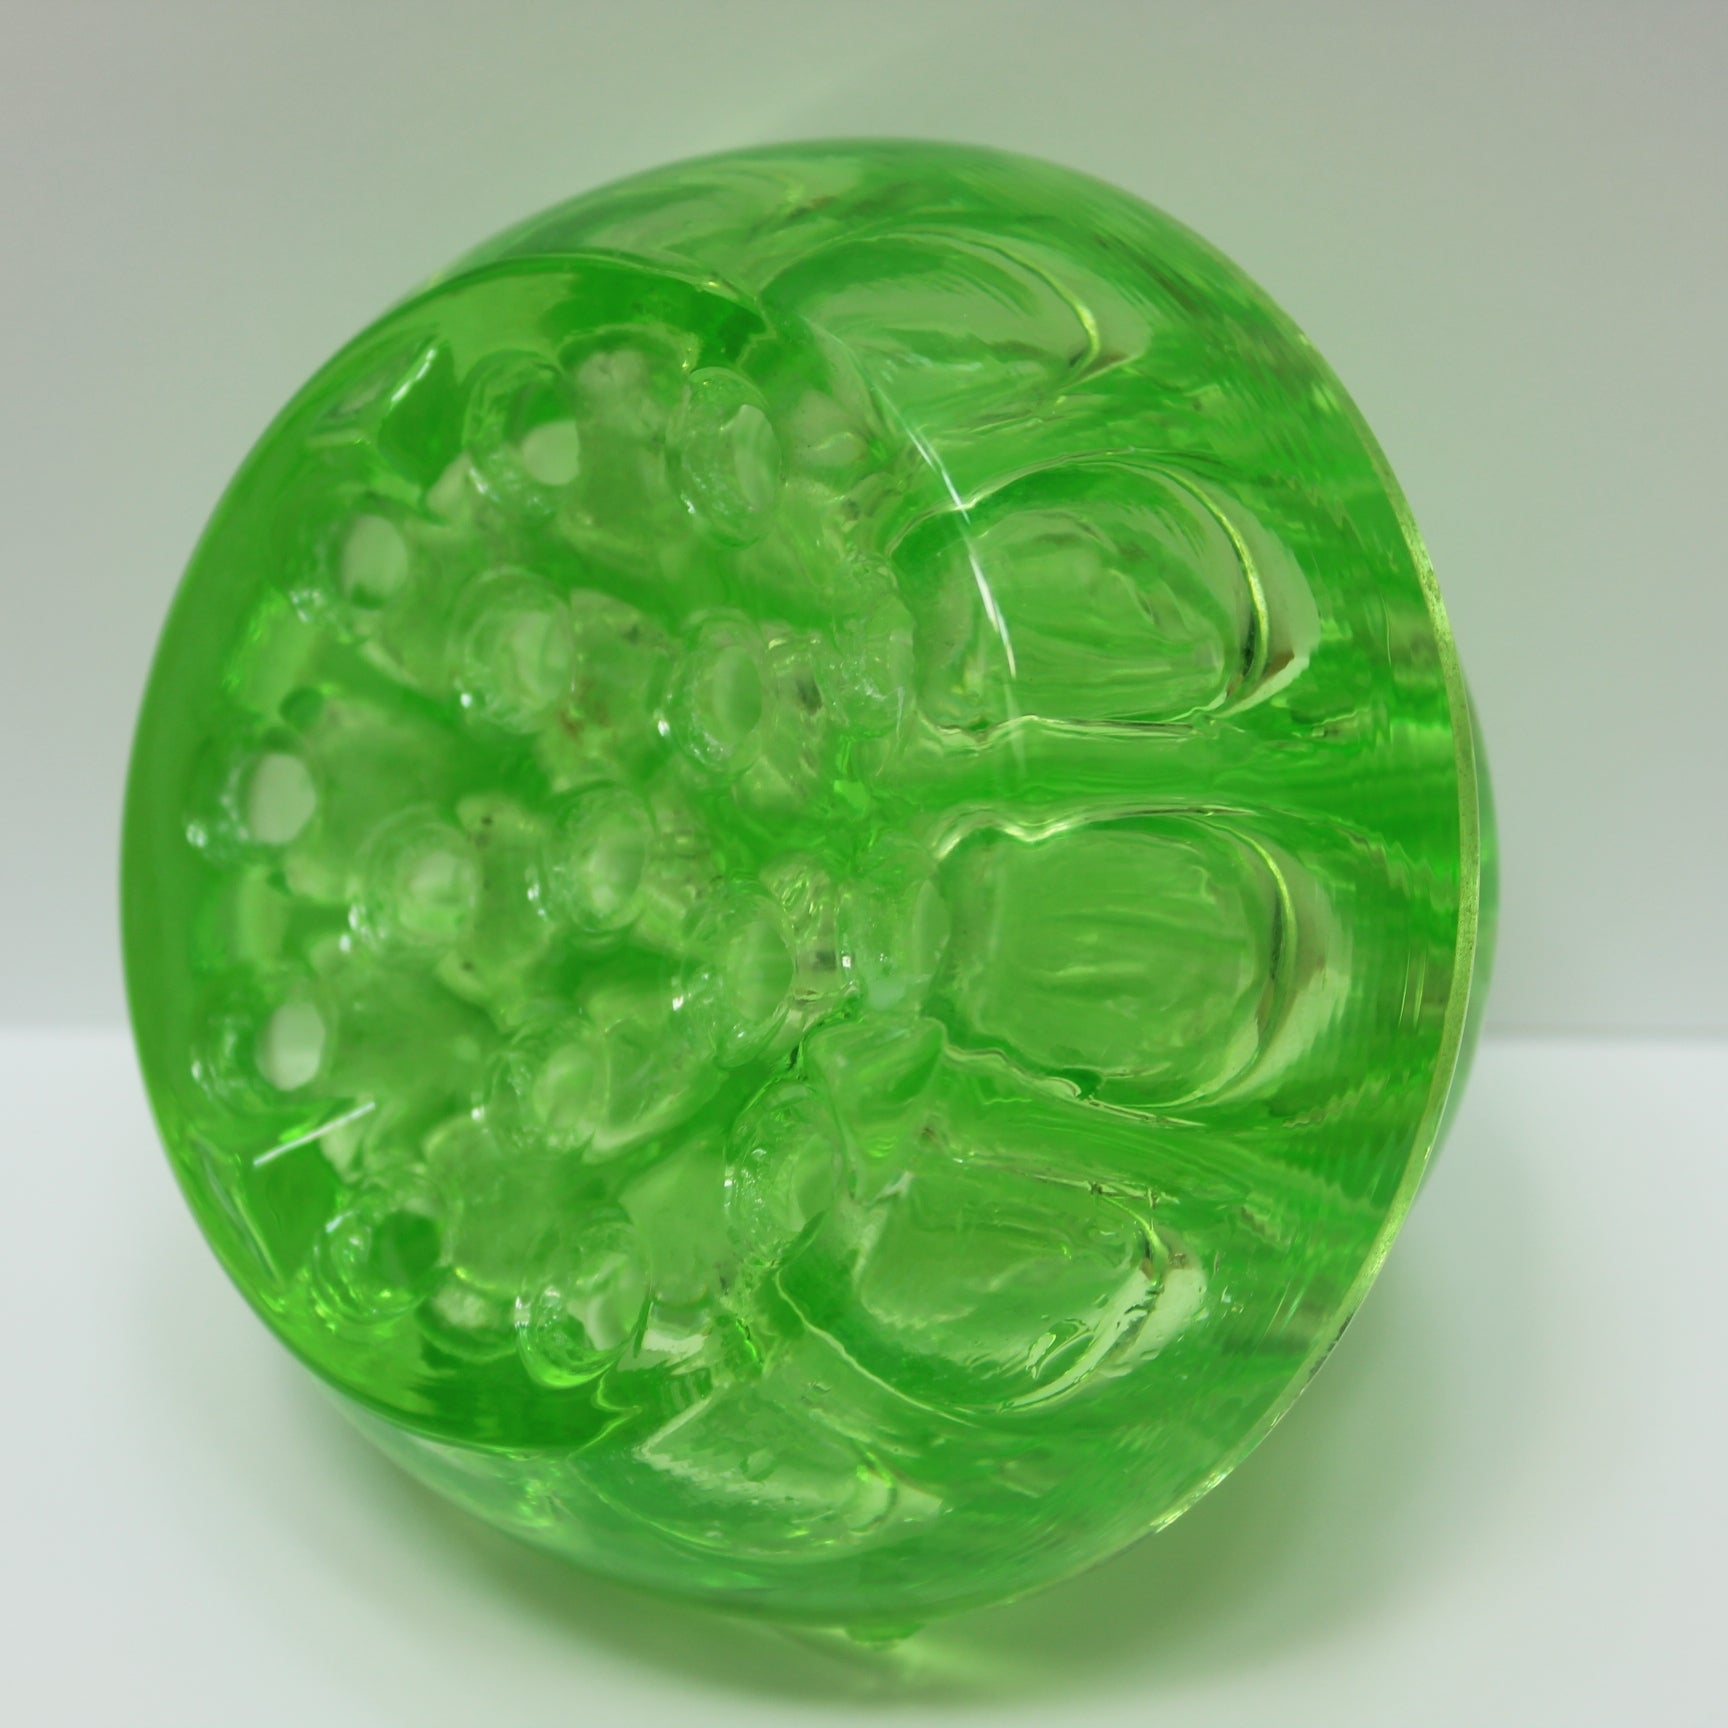 Cambridge 1916 Uranium Green Glass Original Maker Tag - Huge Frog Flower Arranger not used in water